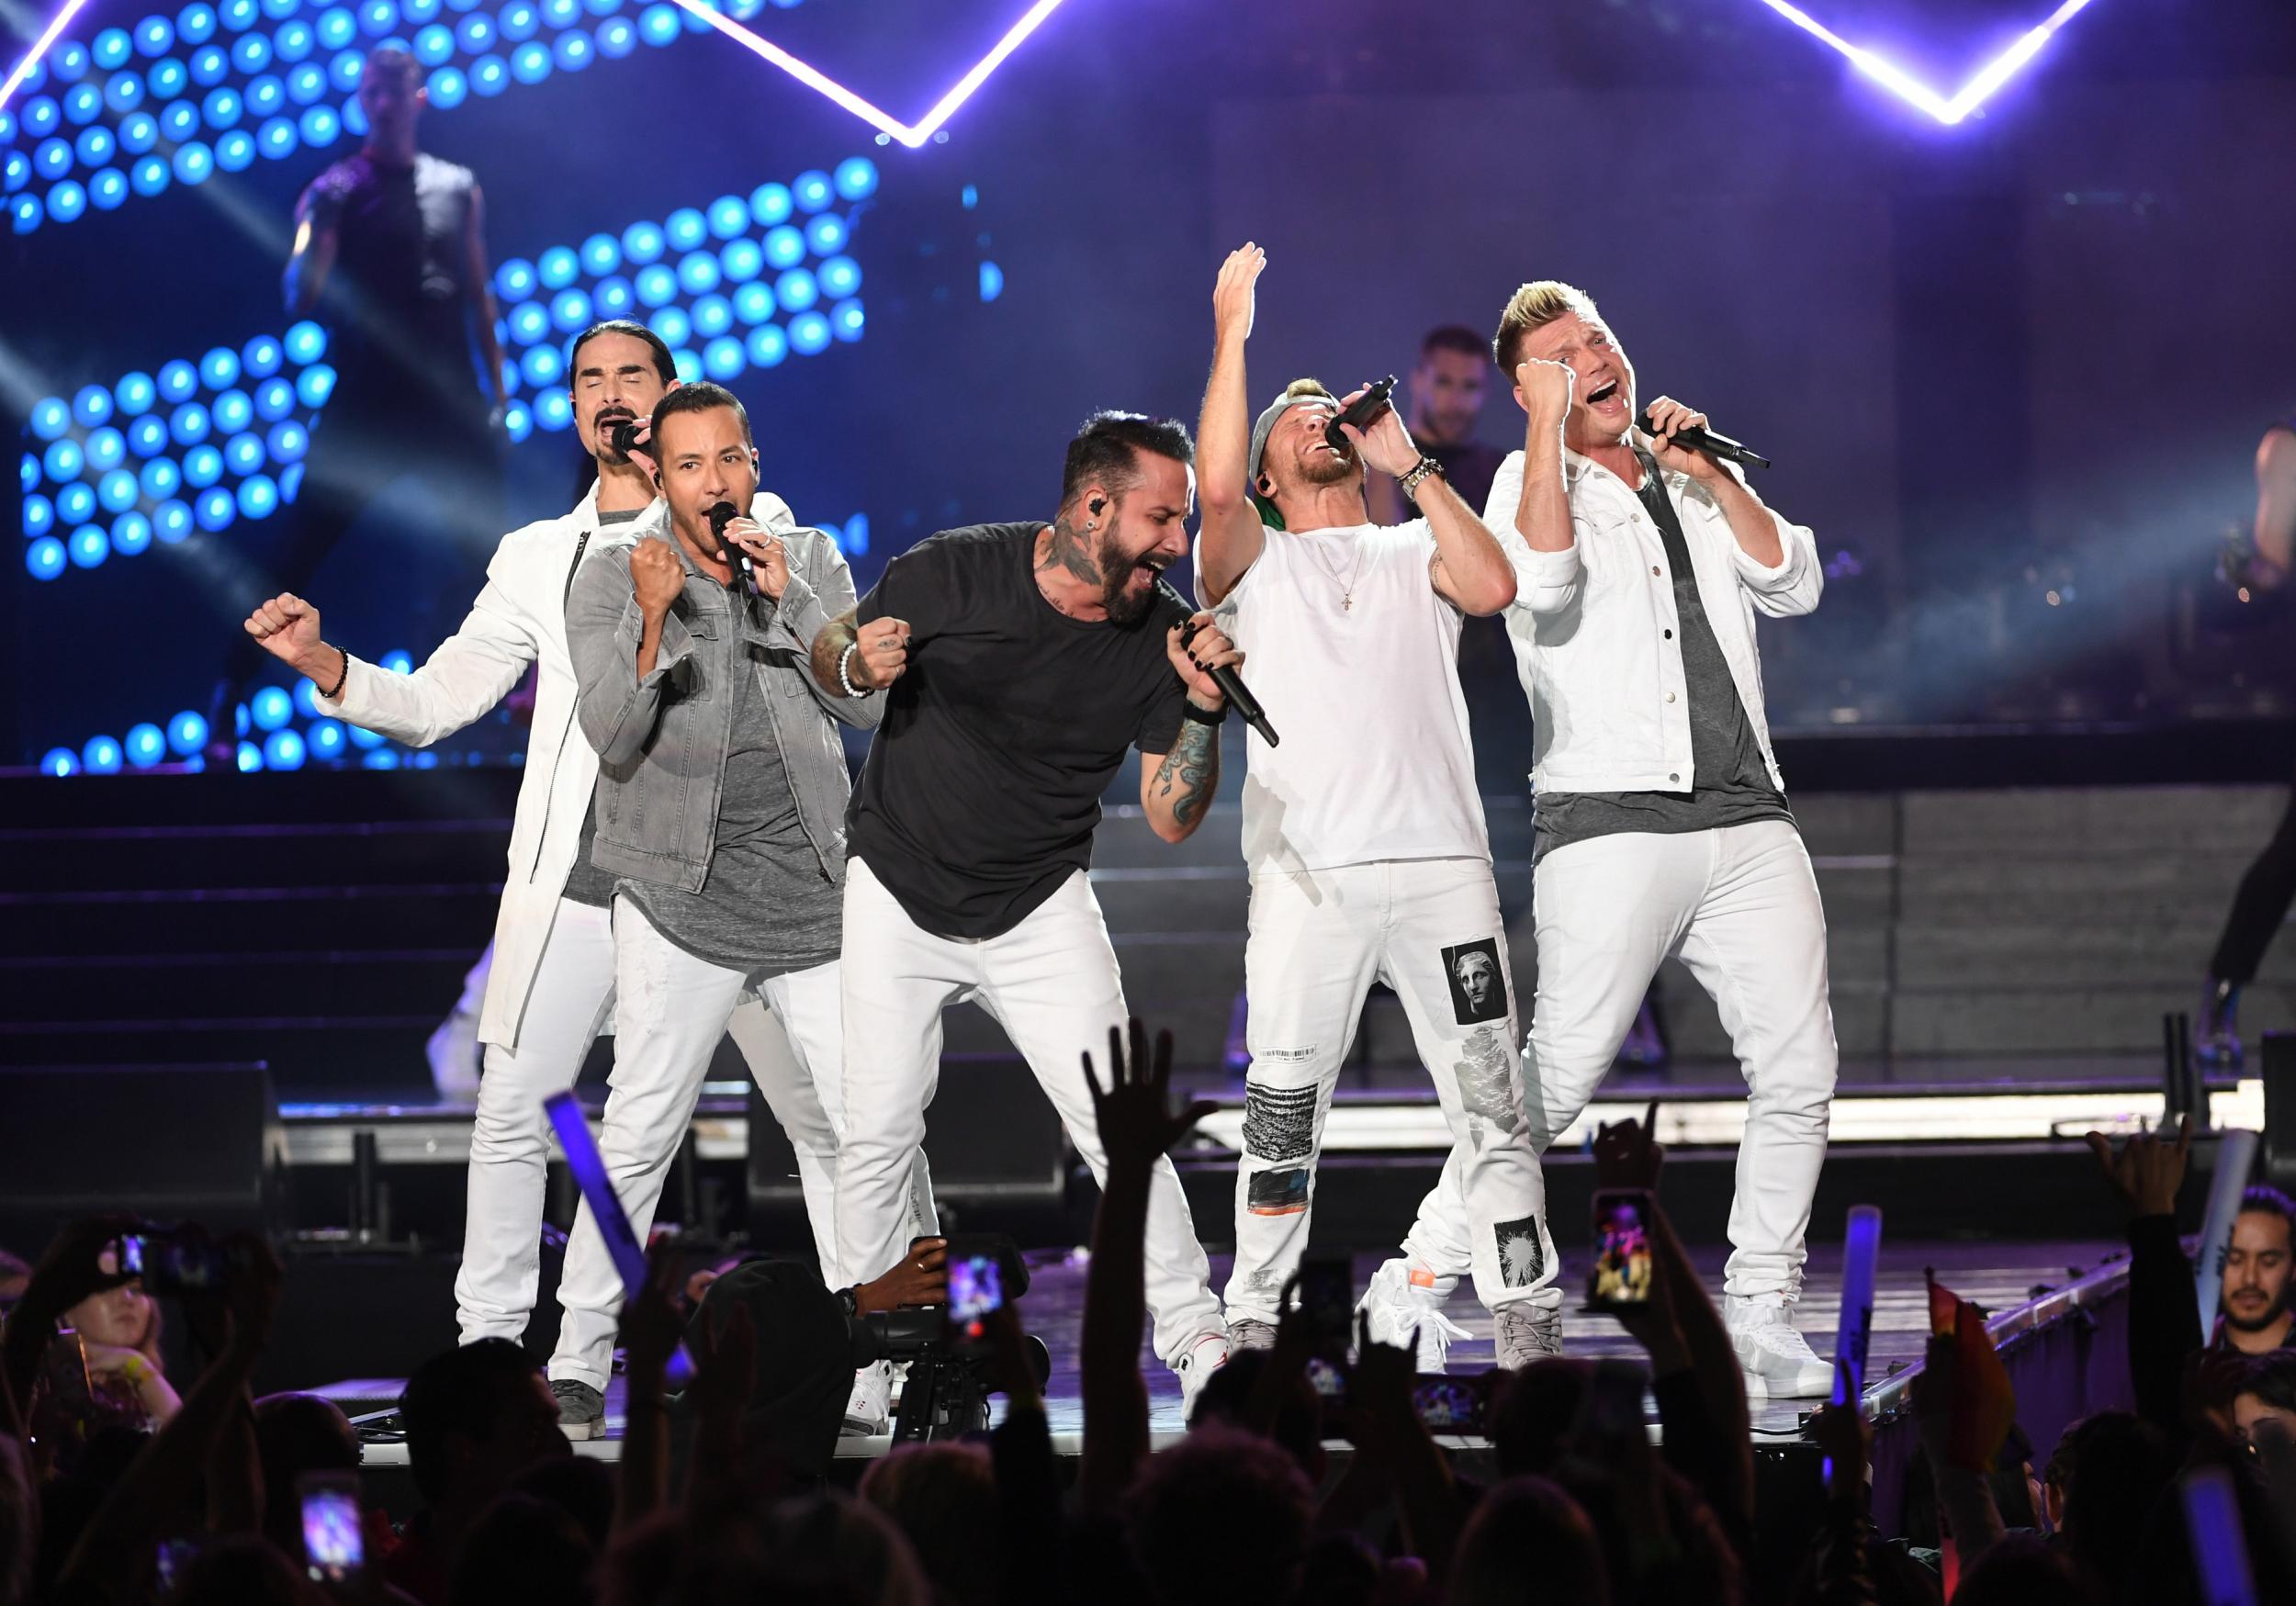 Backstreet Boys: 'I Want It That Way' Has 2 Versions; The Original